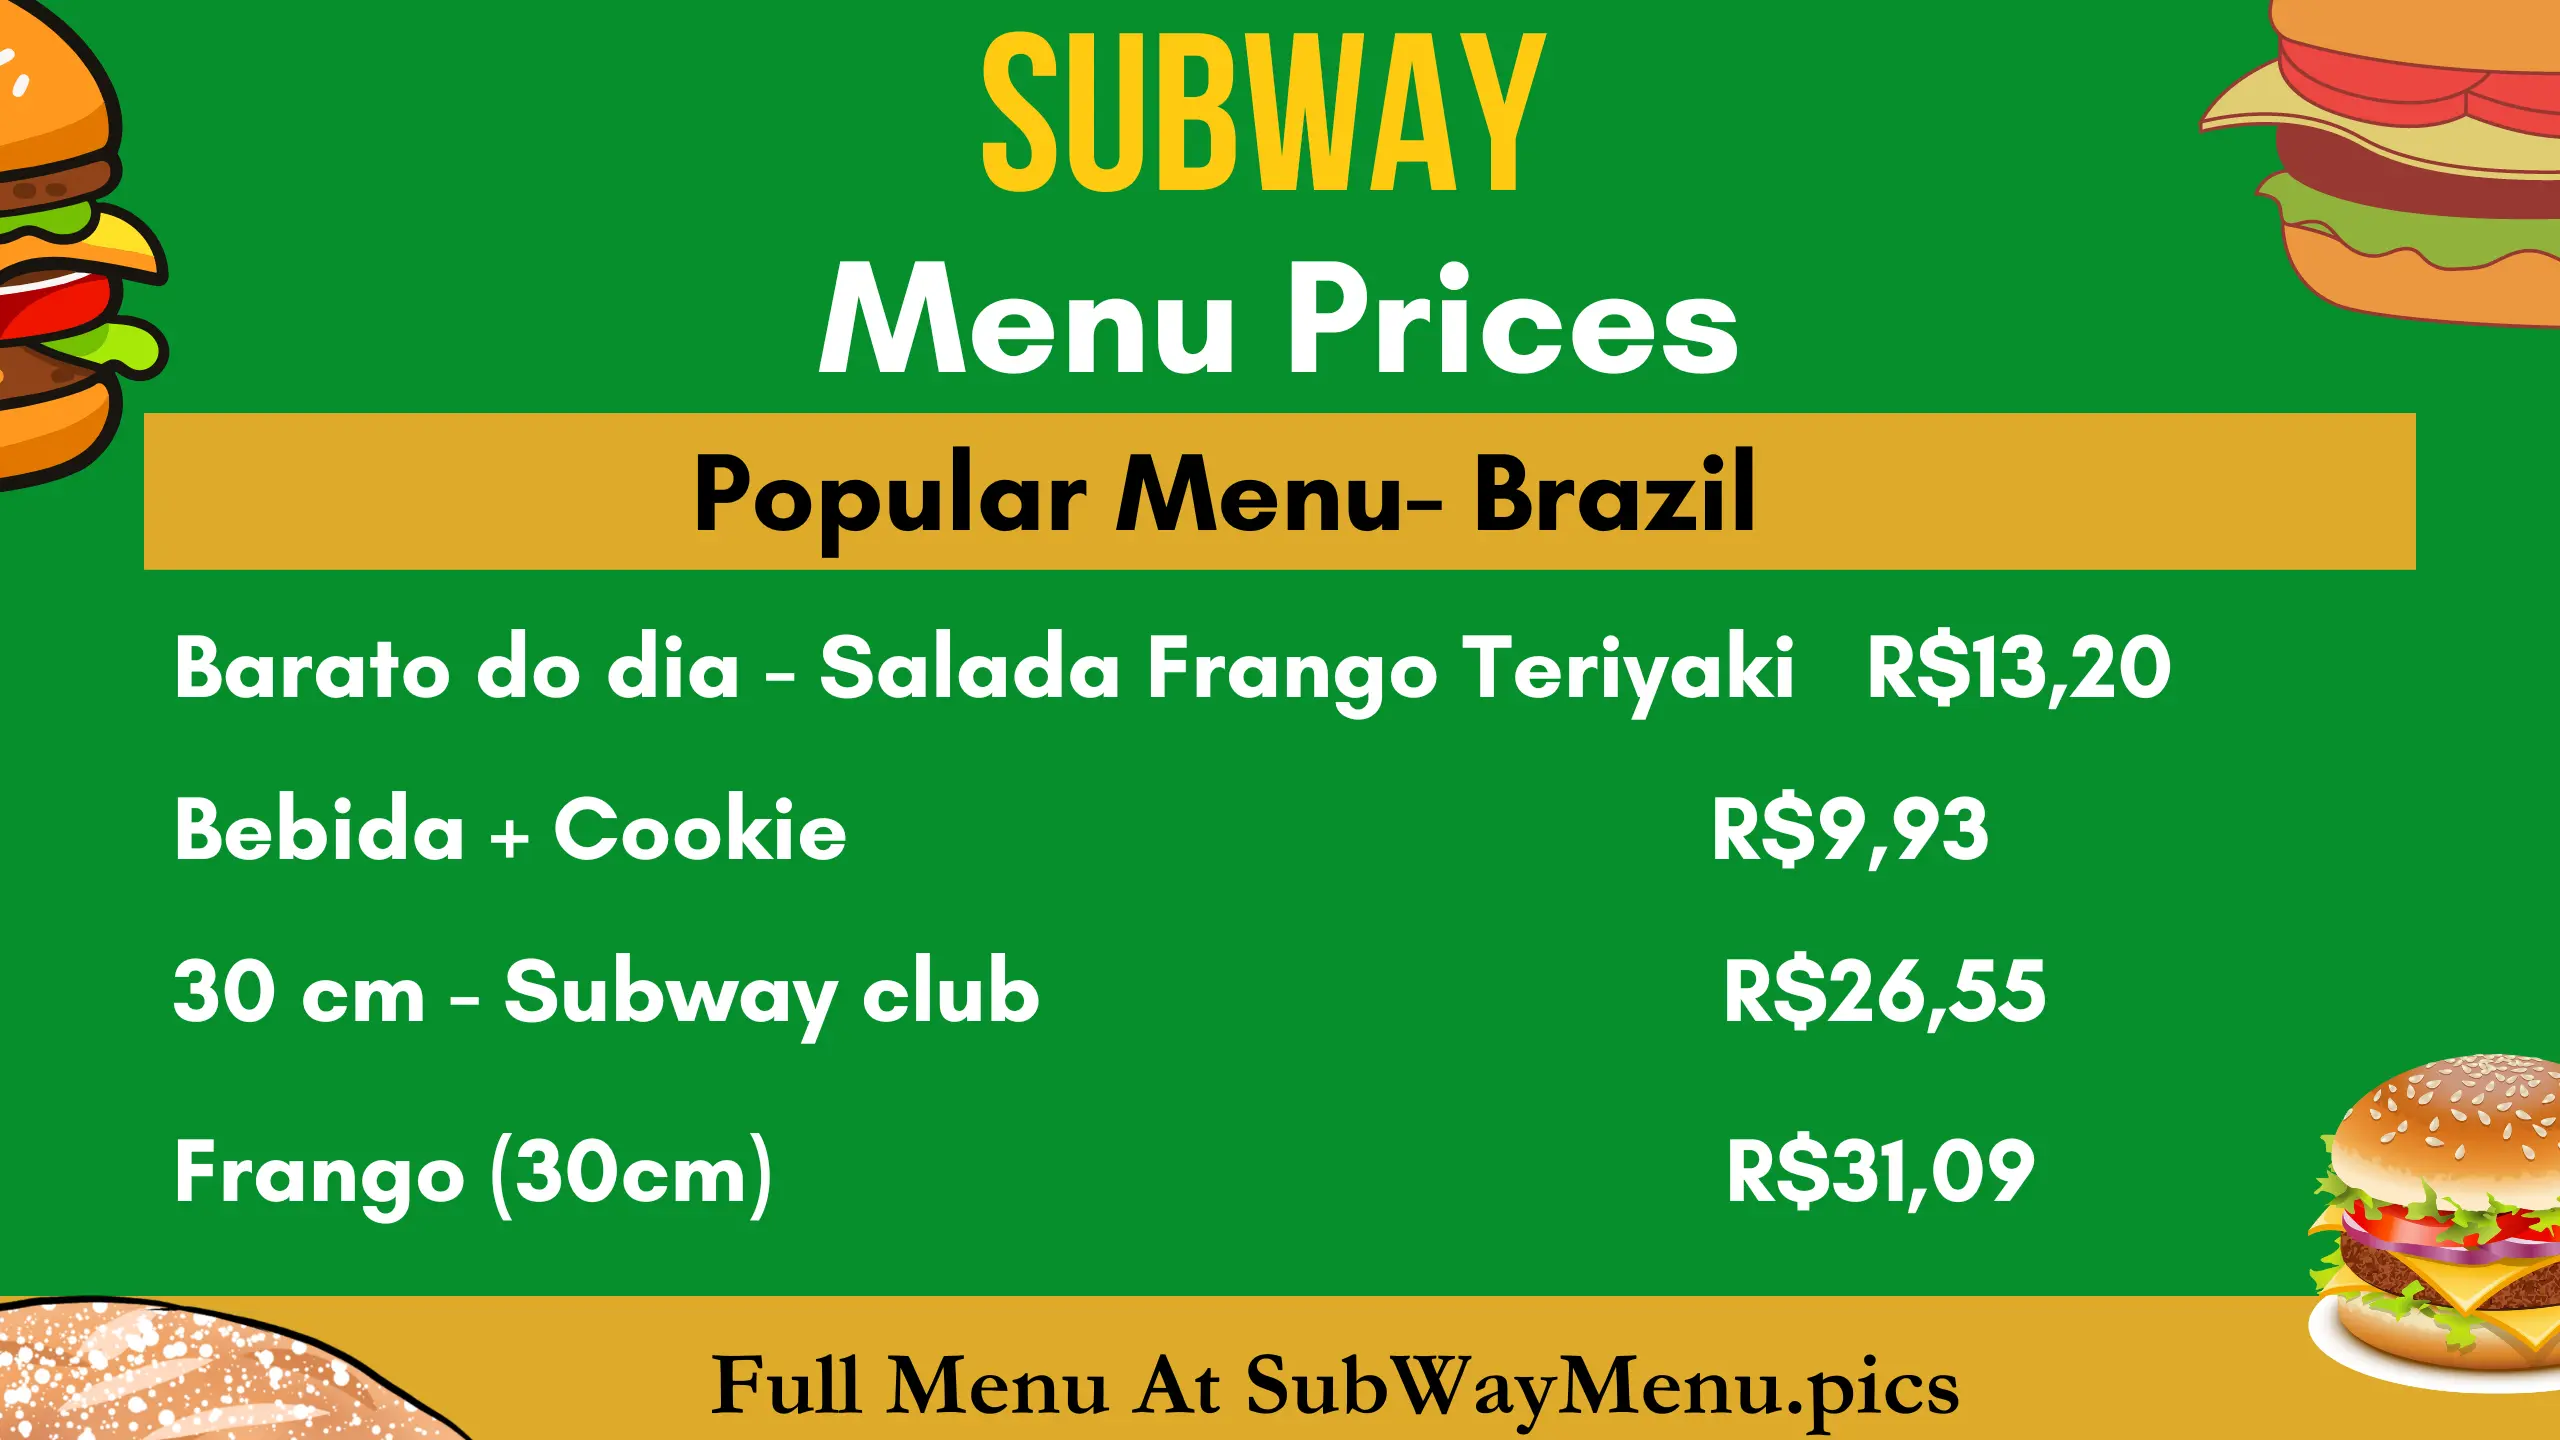 Subway Cardápio Preços (Brazil)